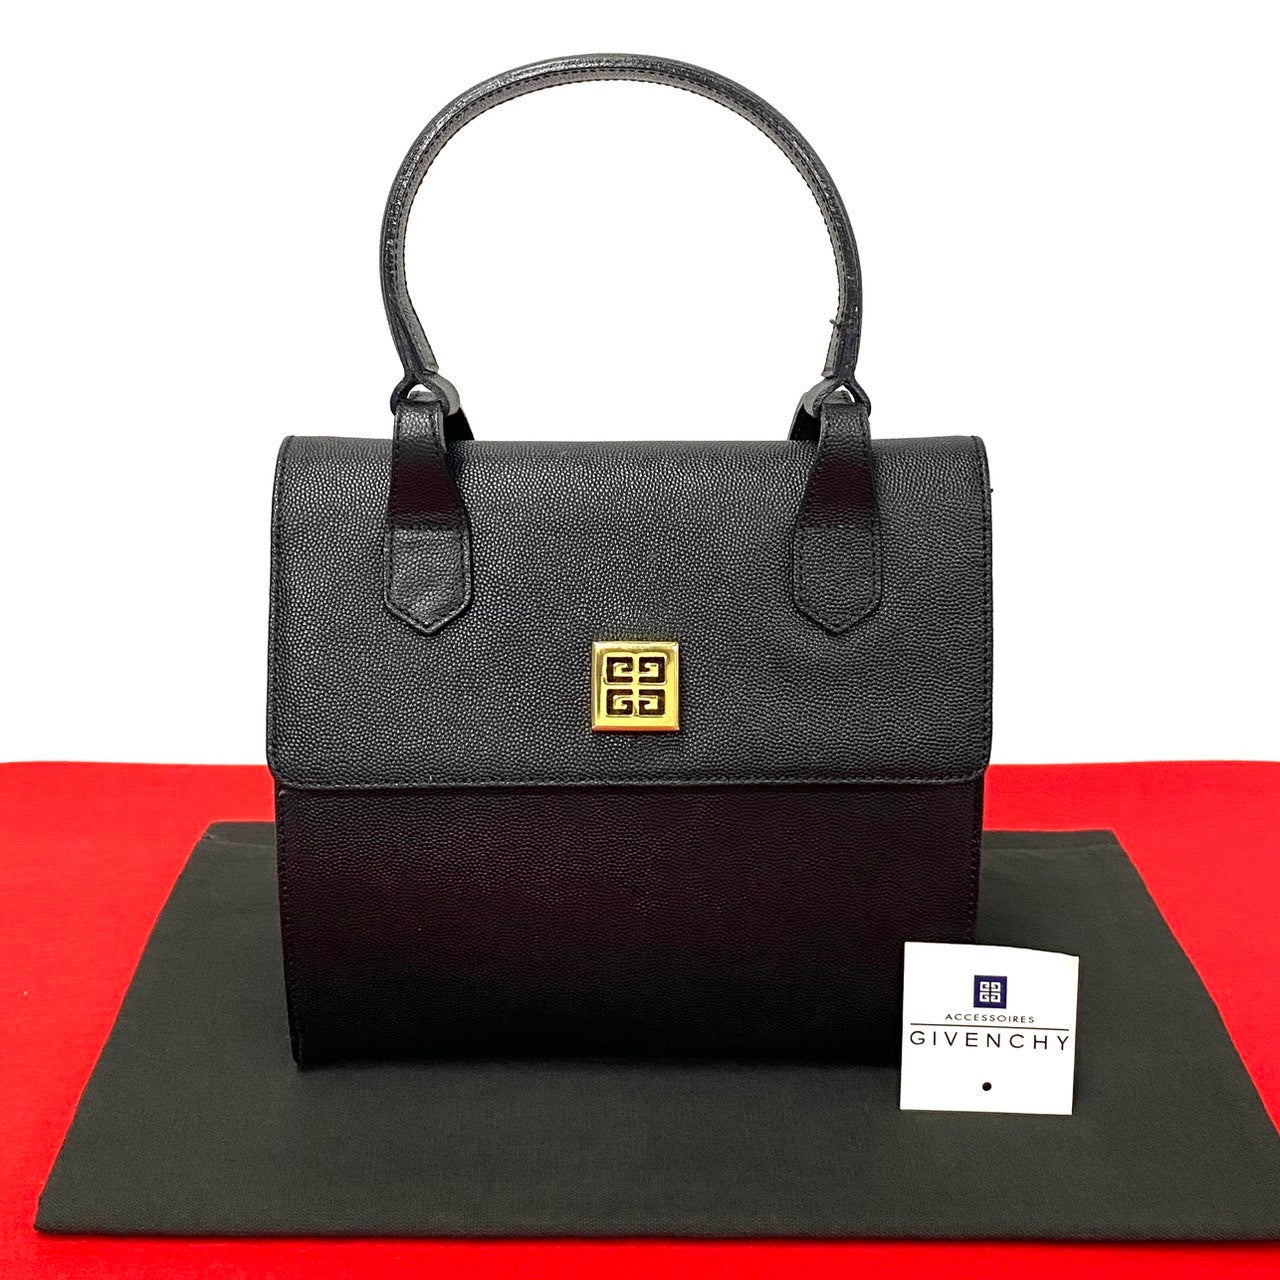 Givenchy Caviar Top Handle Bag  Leather Handbag in Good condition